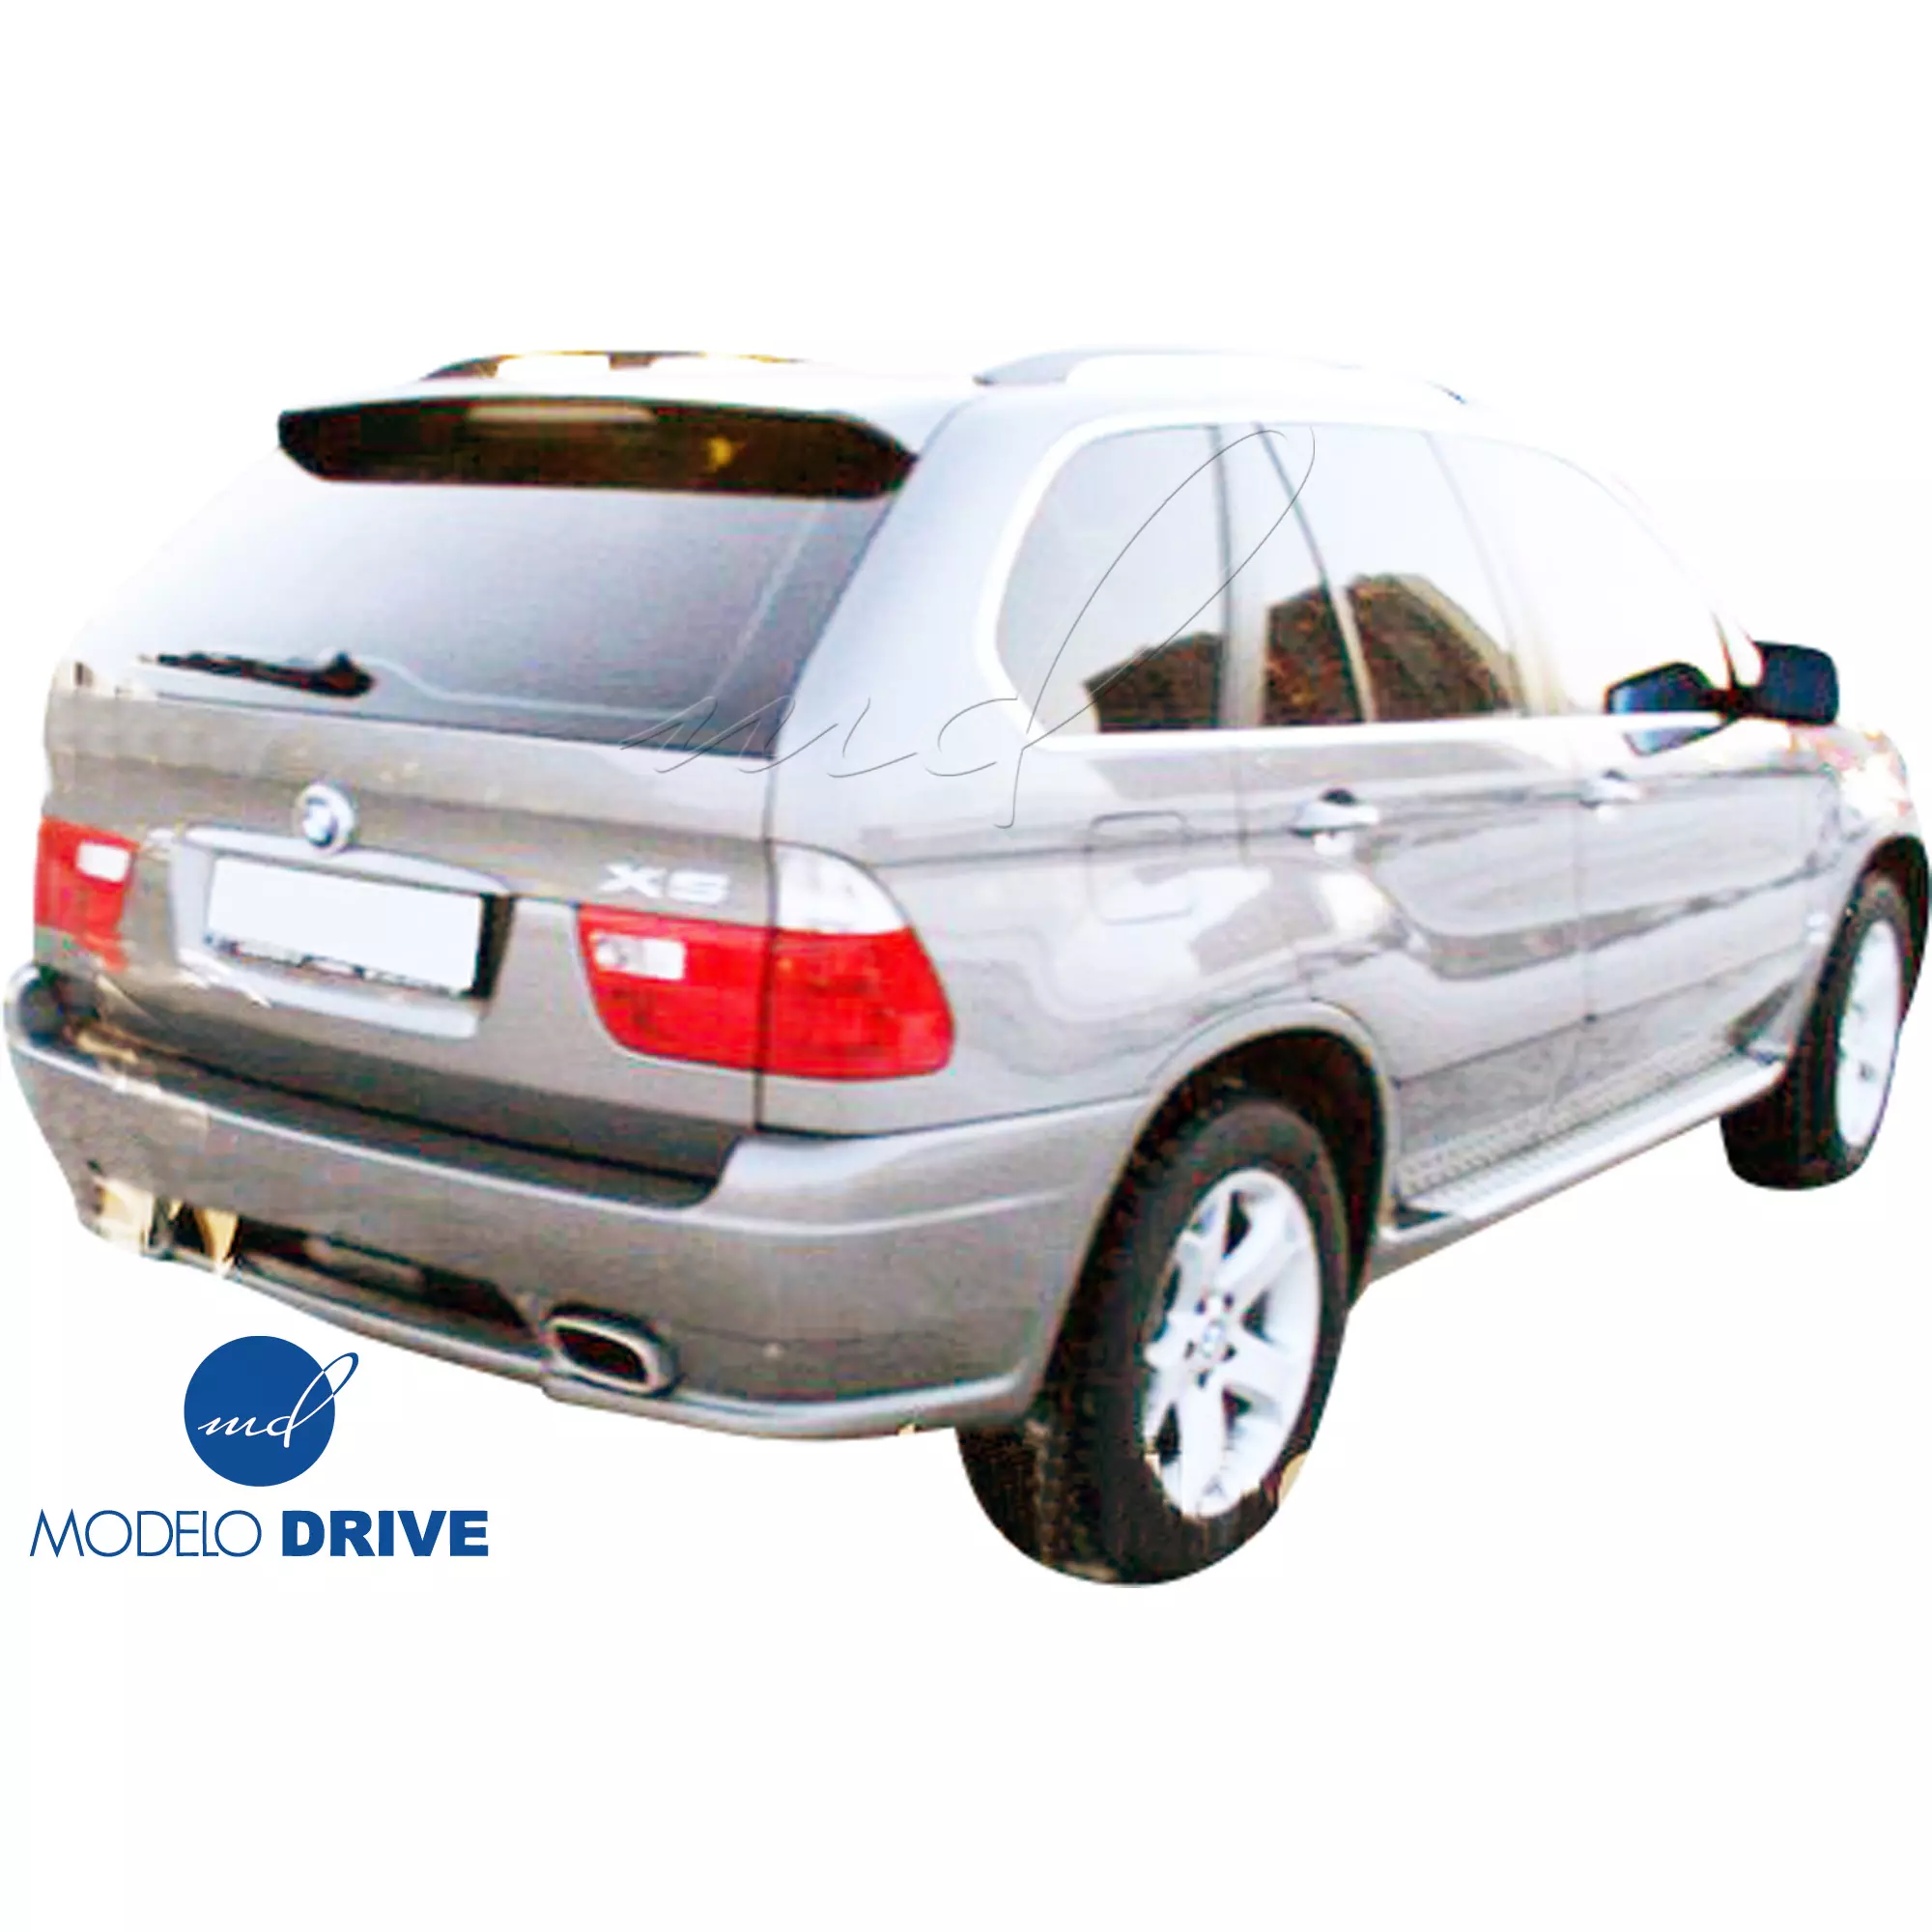 ModeloDrive FRP HAMA Body Kit 3pc > BMW X5 E53 2000-2006 > 5dr - Image 16